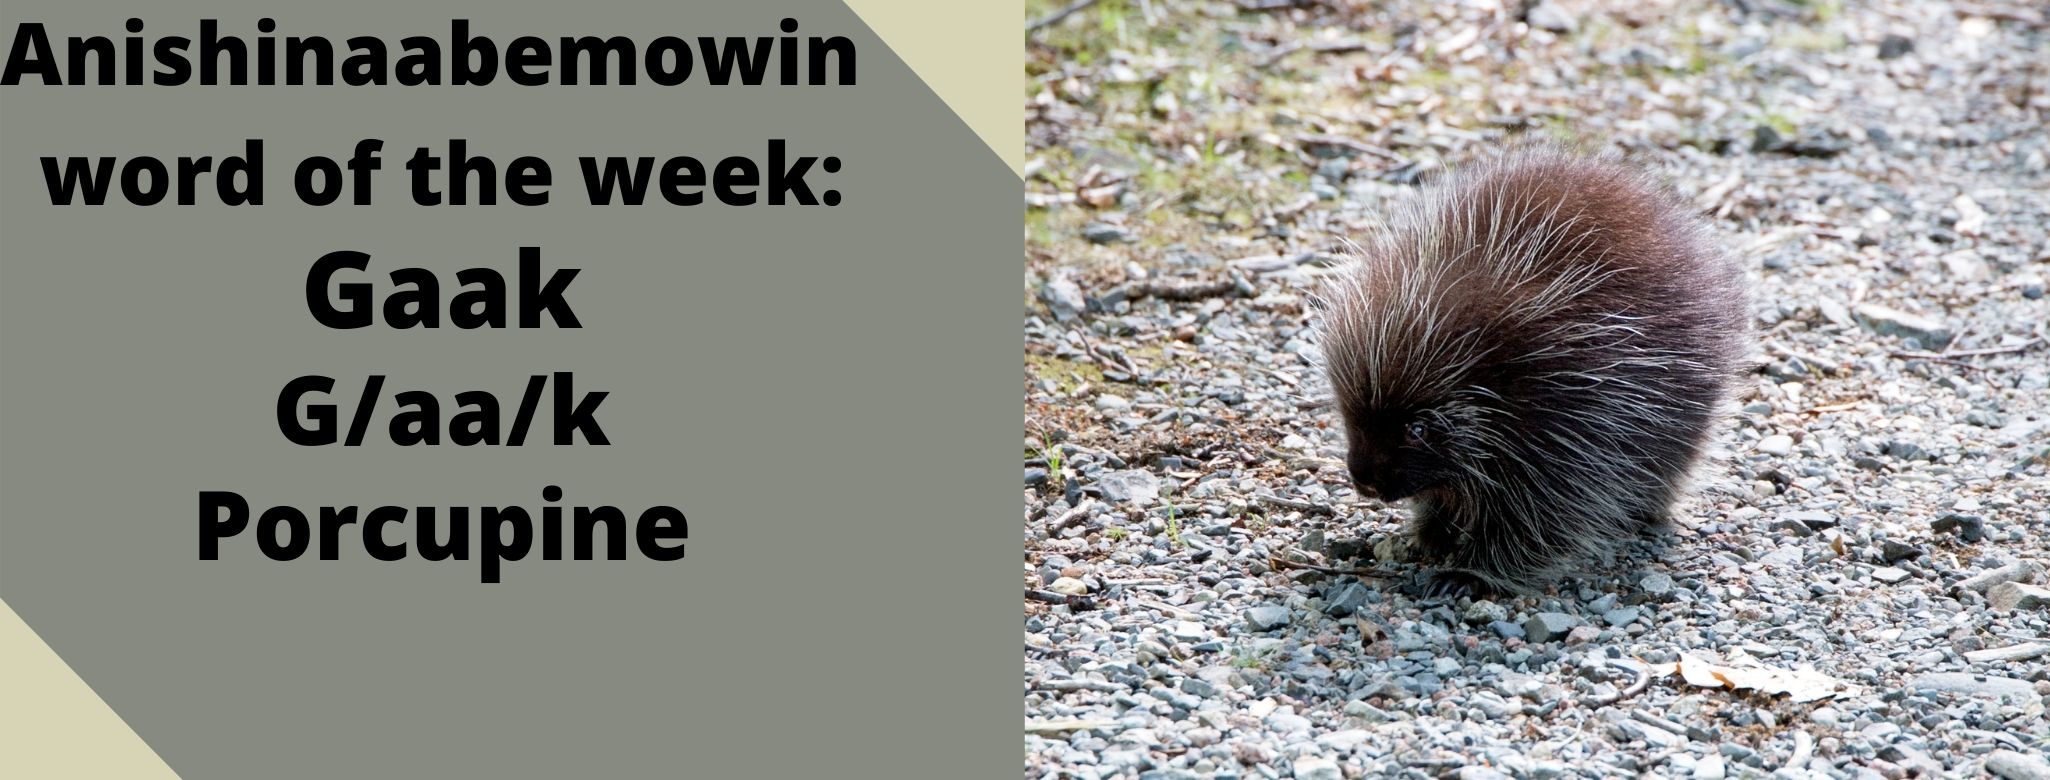 Anishinaabemowin word of the week Gaak Porcupine